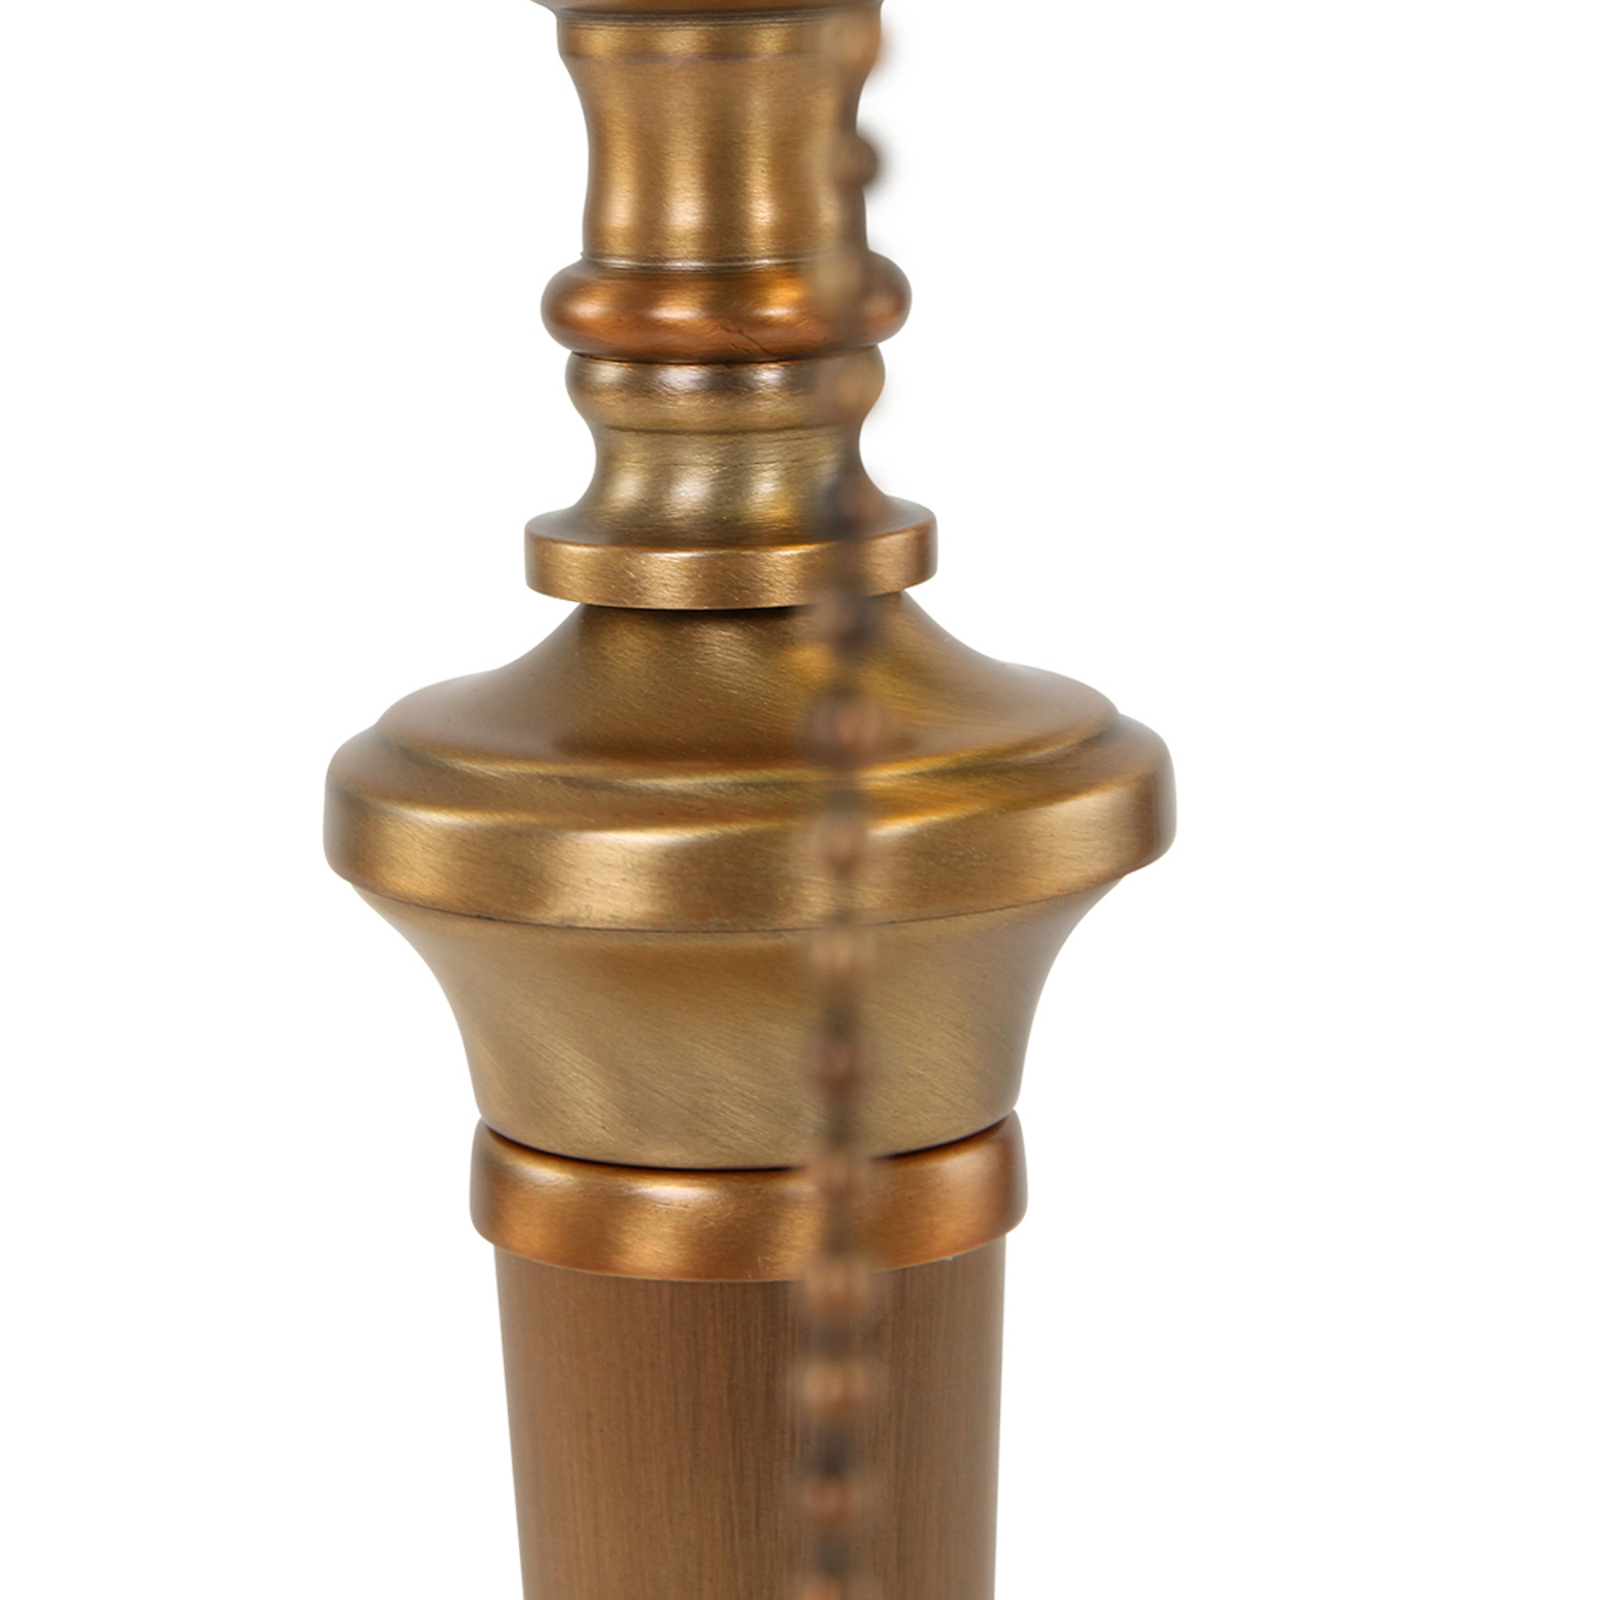 Bureaulamp Ancilla, glazen kap, brons/groen